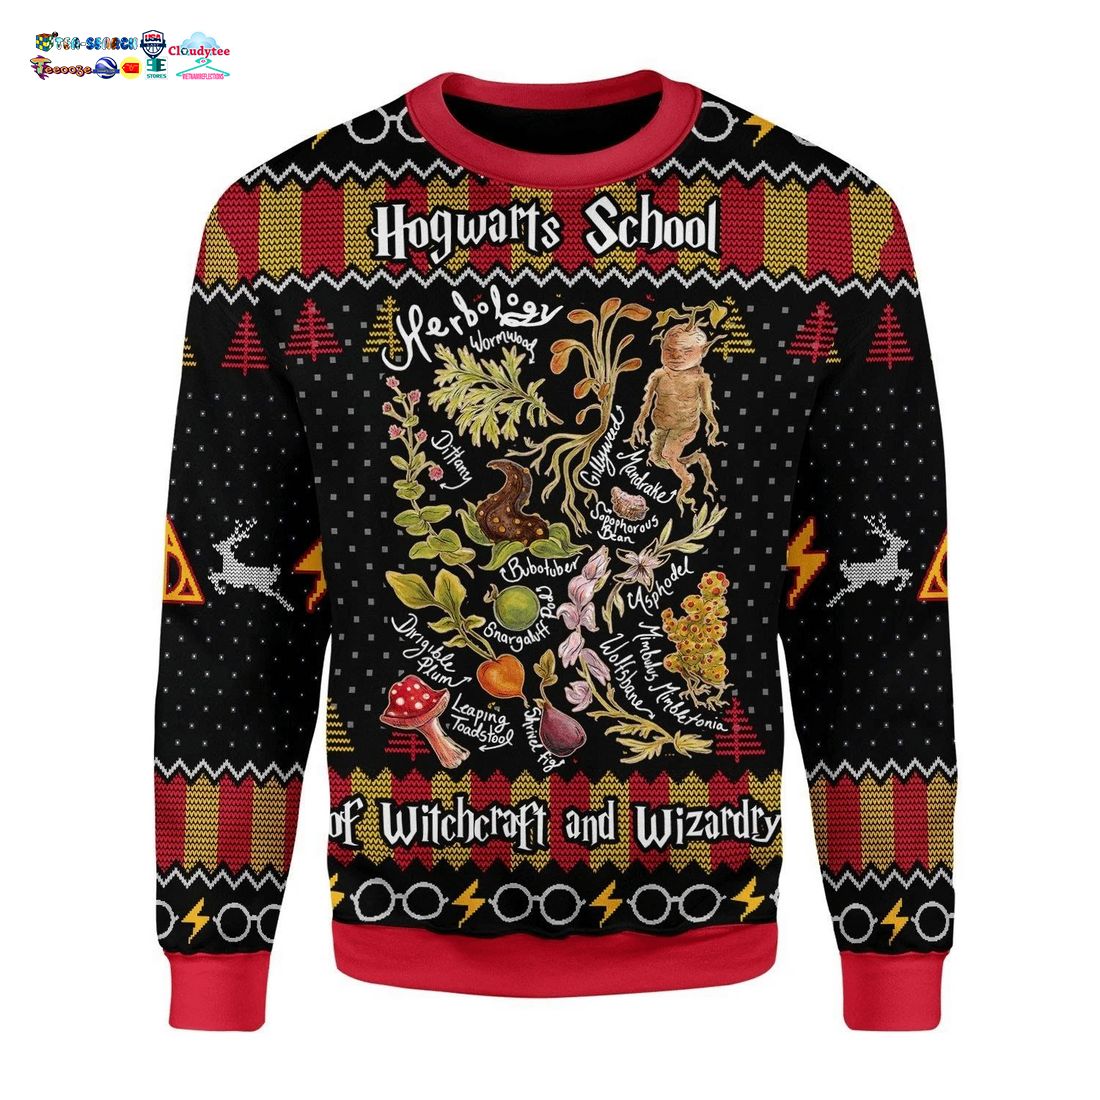 herbology-harry-potter-hogwarts-school-ugly-christmas-sweater-1-CwG67.jpg